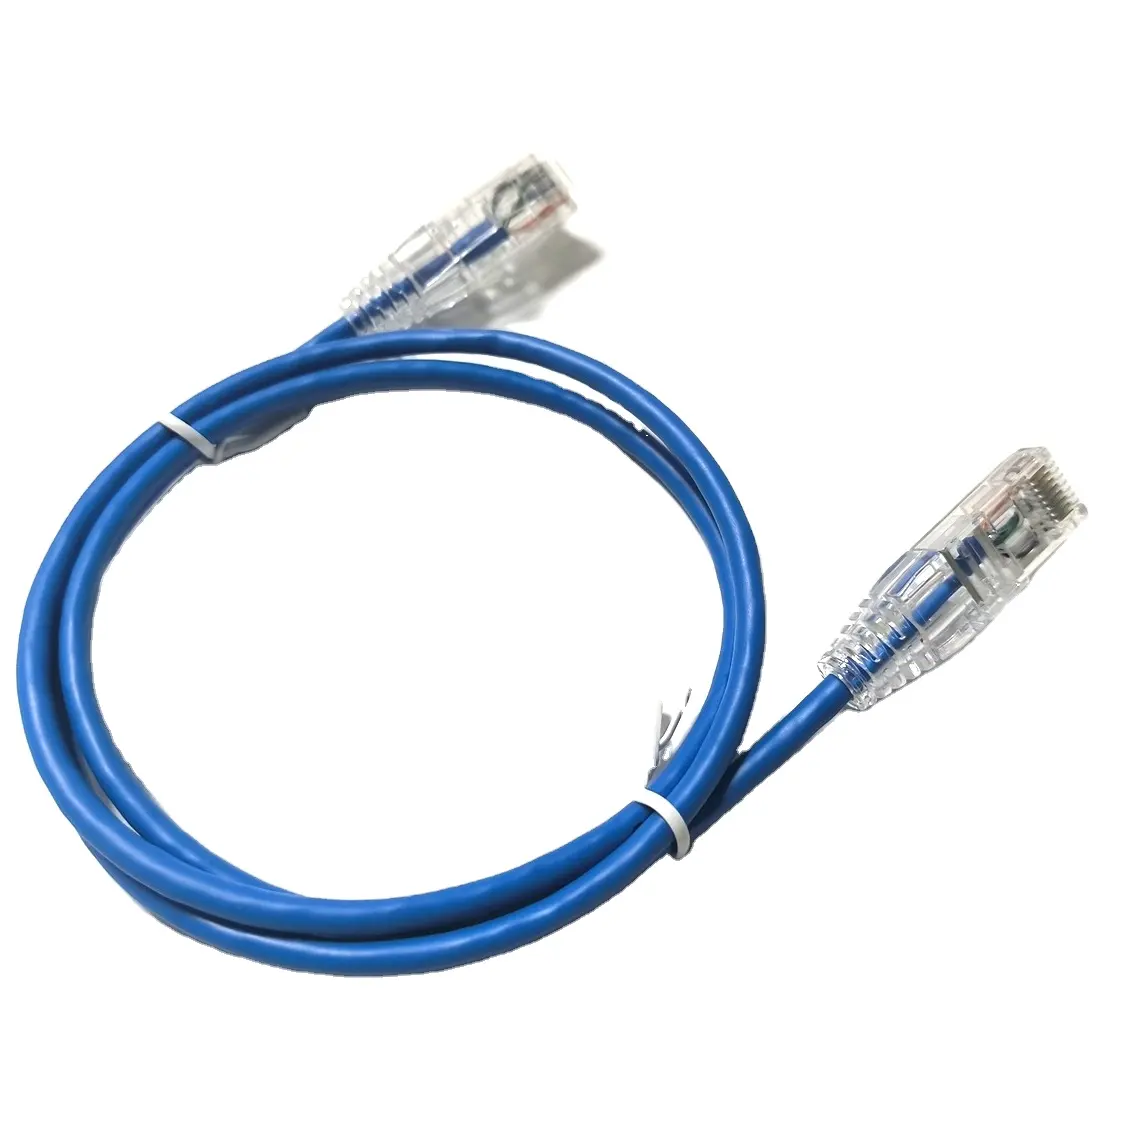 XXD ultrathin rede cabo cat 6 slim cabo RJ45 OEM embalagem PVC/LSZH jaqueta de cobre nu 28awg Ethernet patch cord cabo